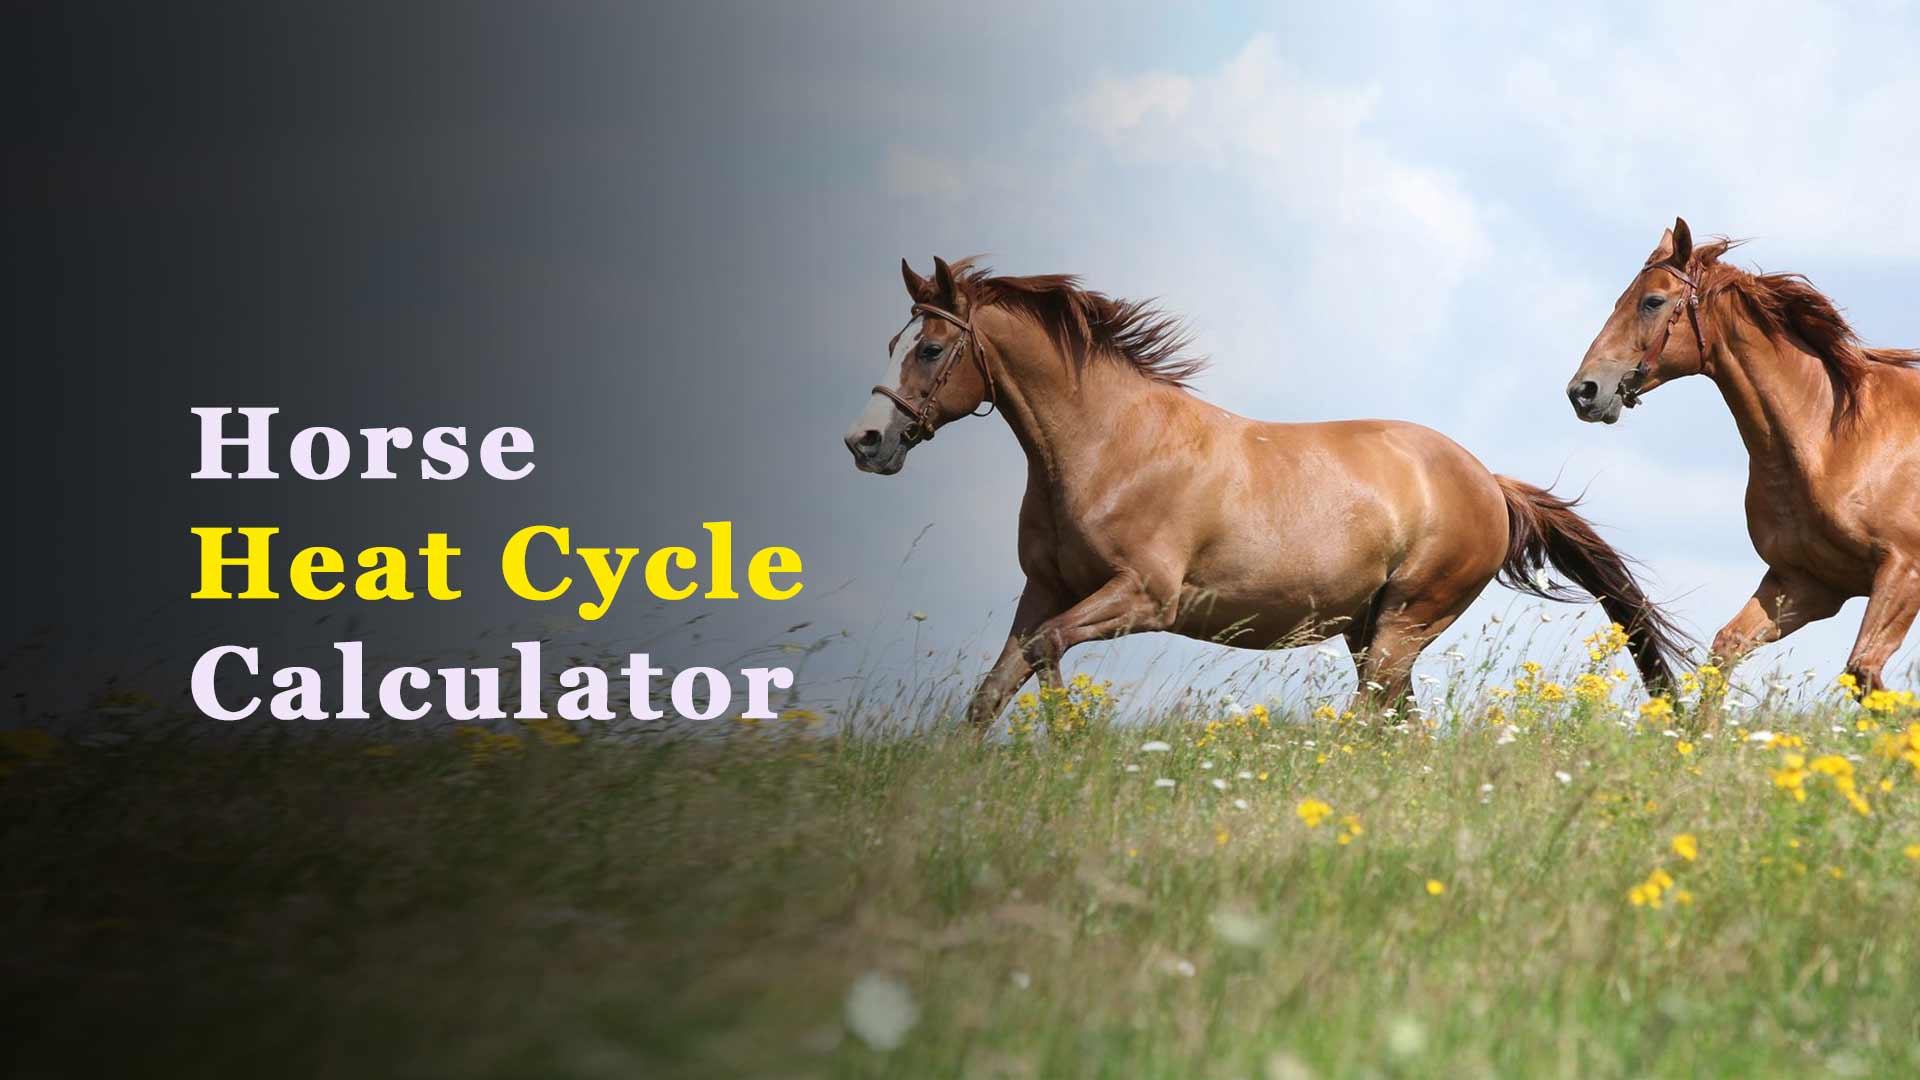 Horse Heat Cycle Calculator